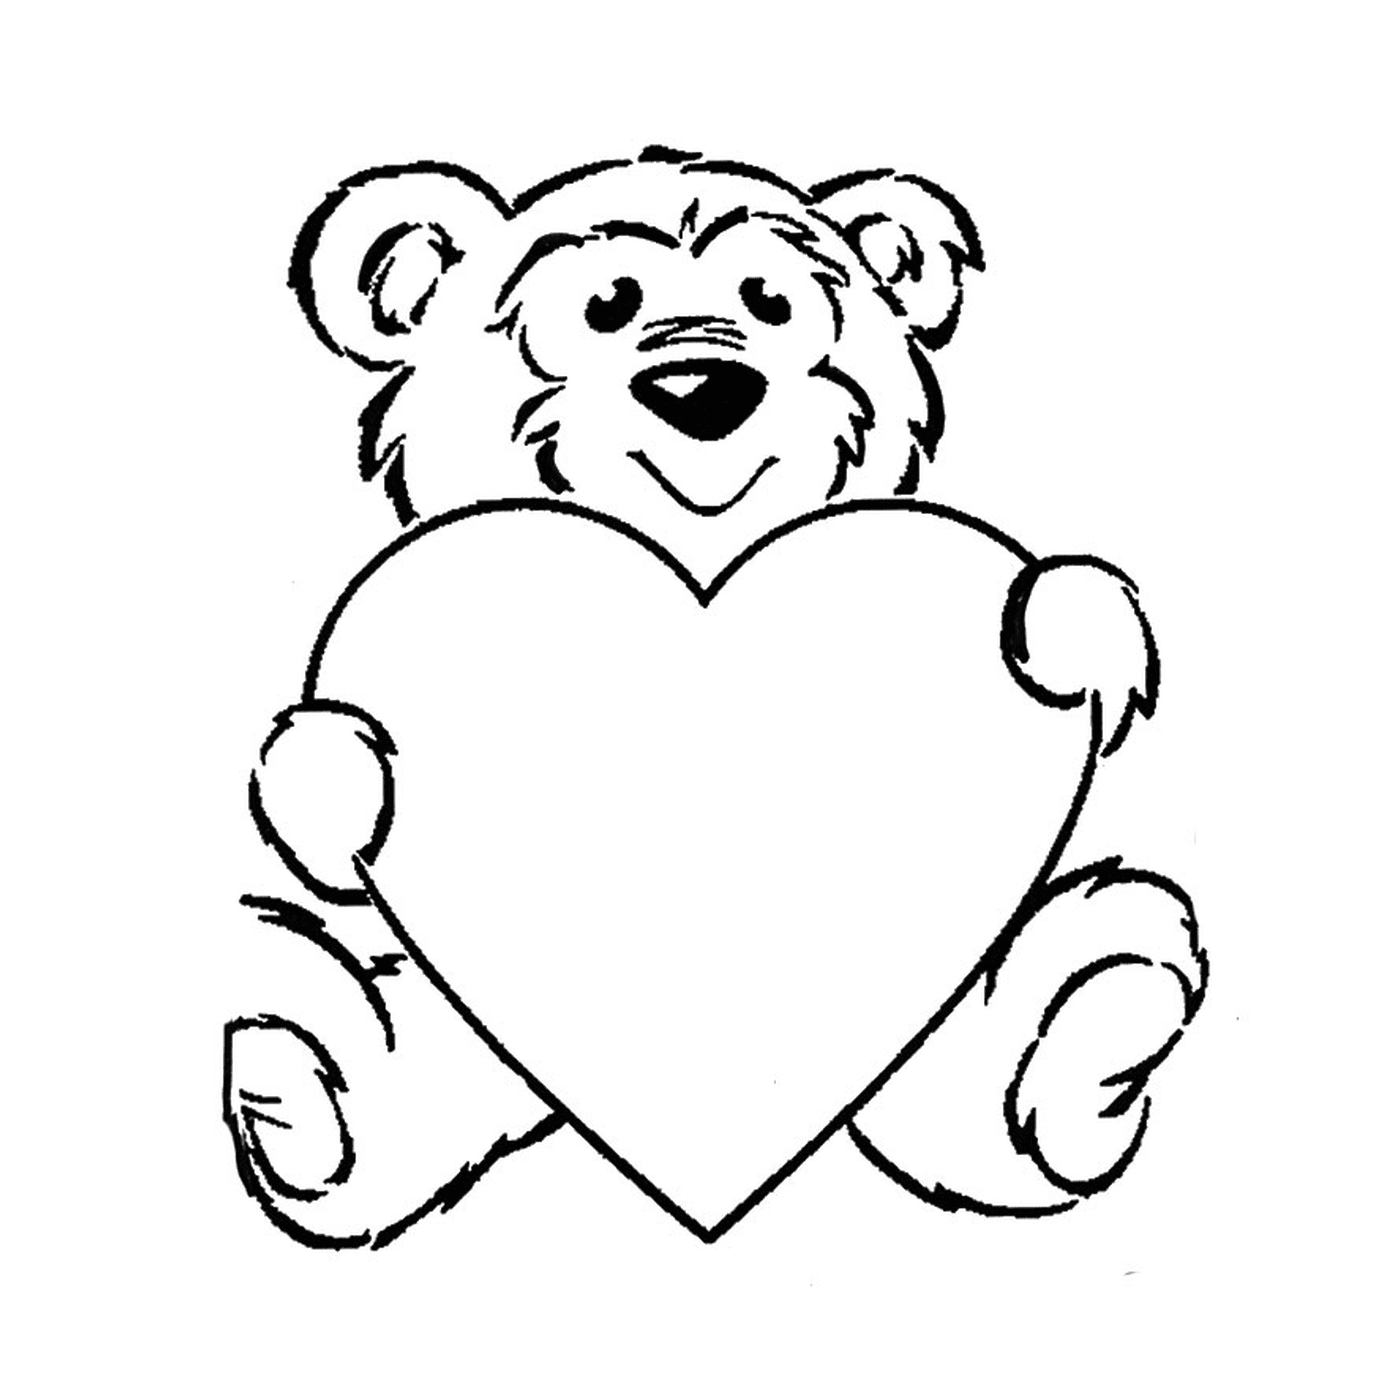  Медвежонок, держащий сердце 